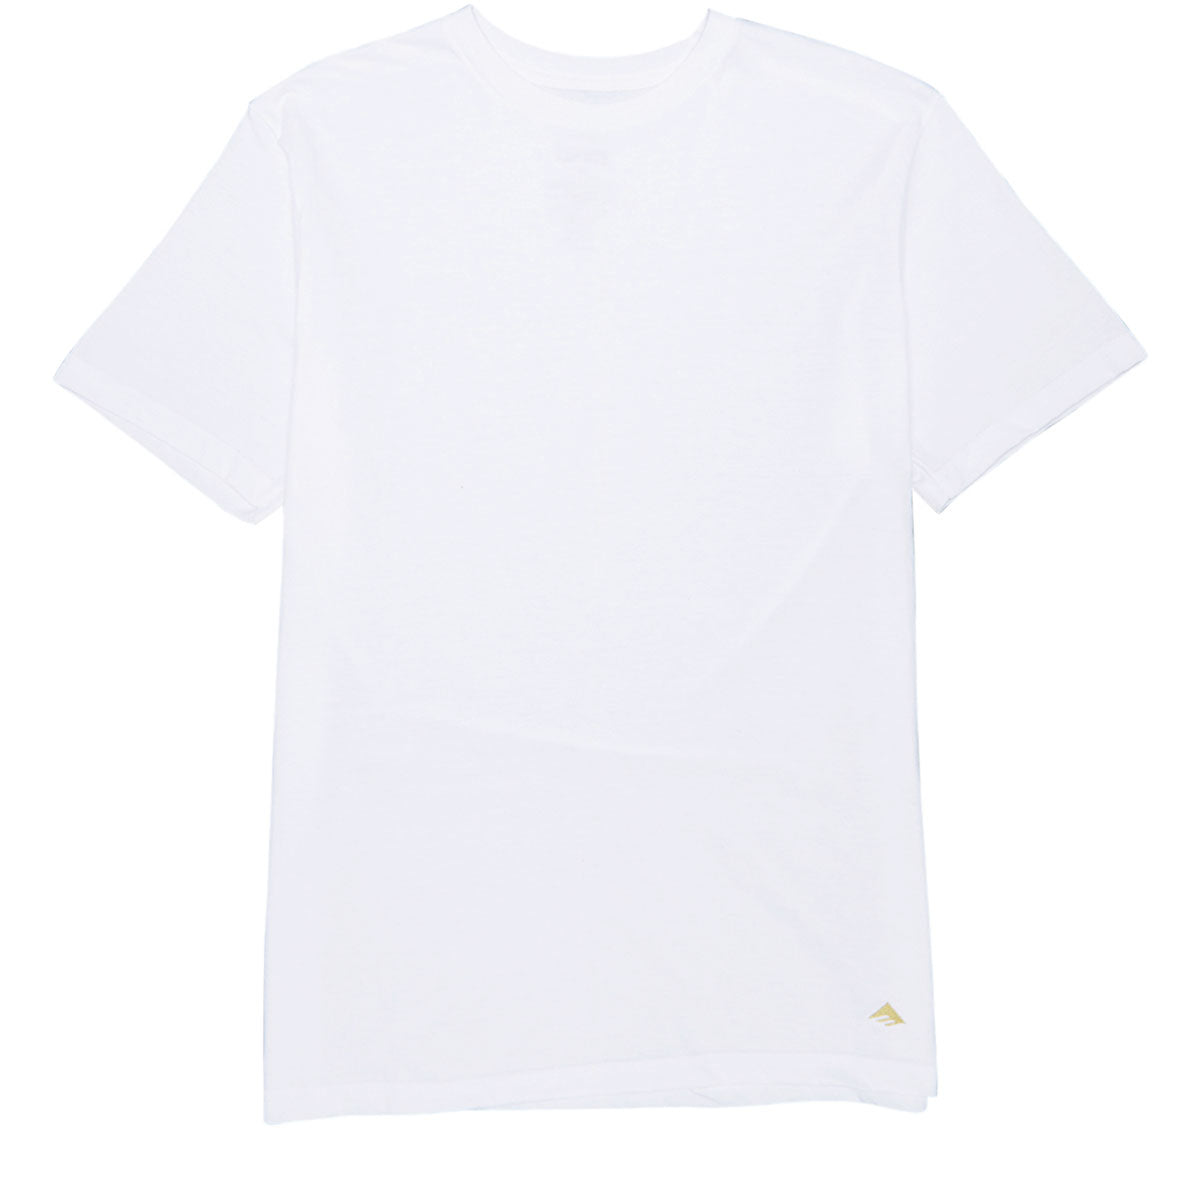 Emerica Micro Triangle T-Shirt - White image 1